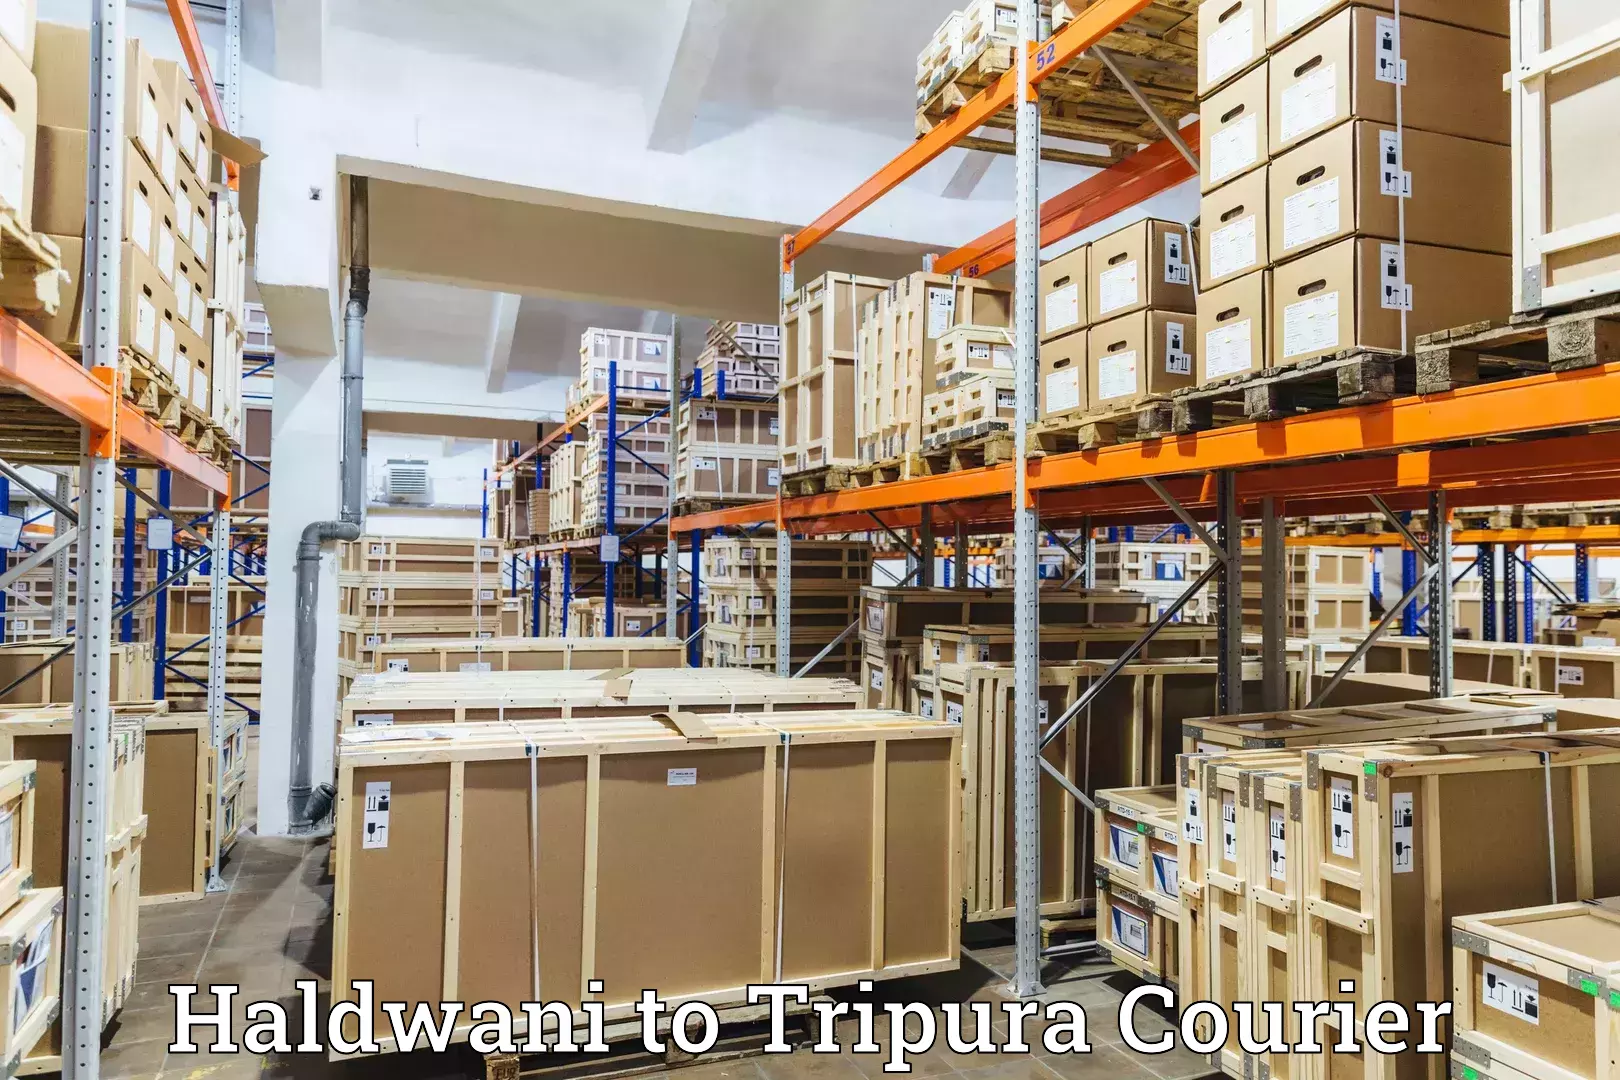 Business delivery service Haldwani to Udaipur Tripura